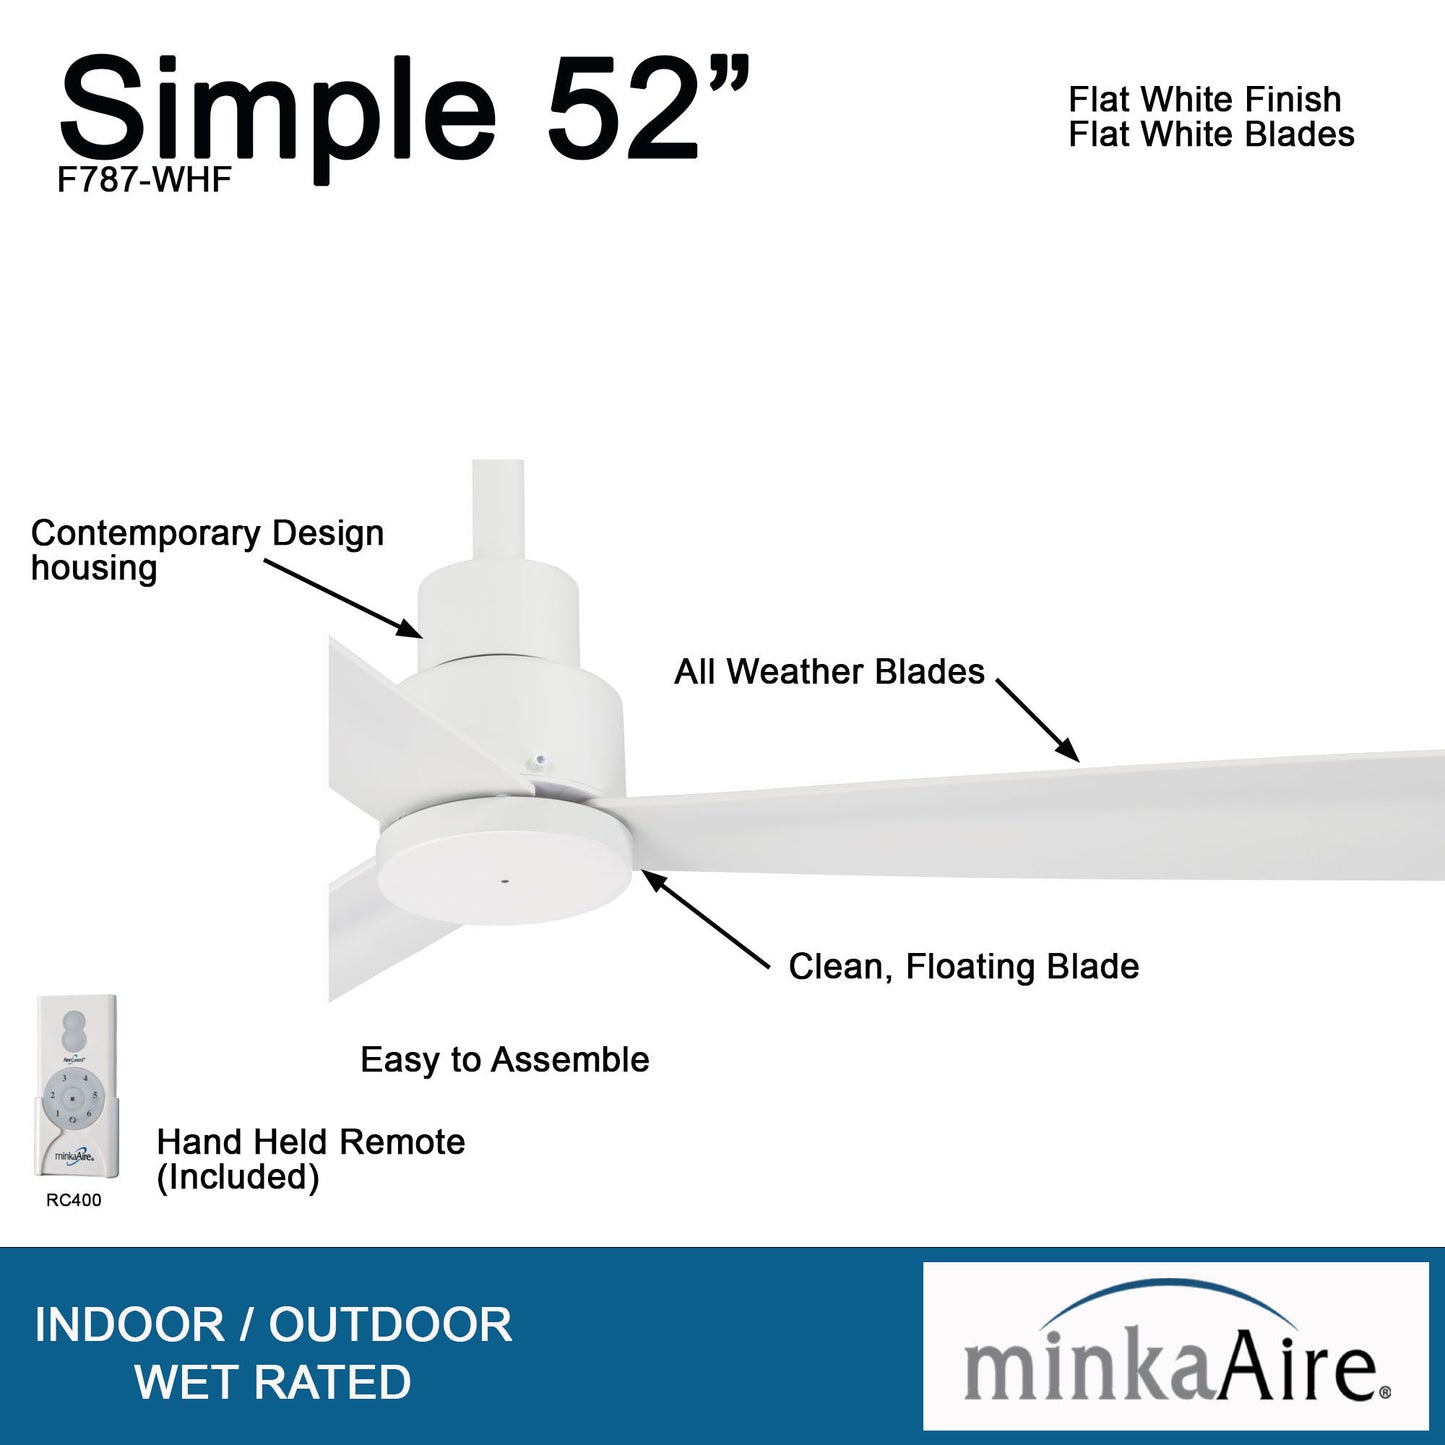 Minka Aire Simple 52 シーリングファン【F787-WHF】